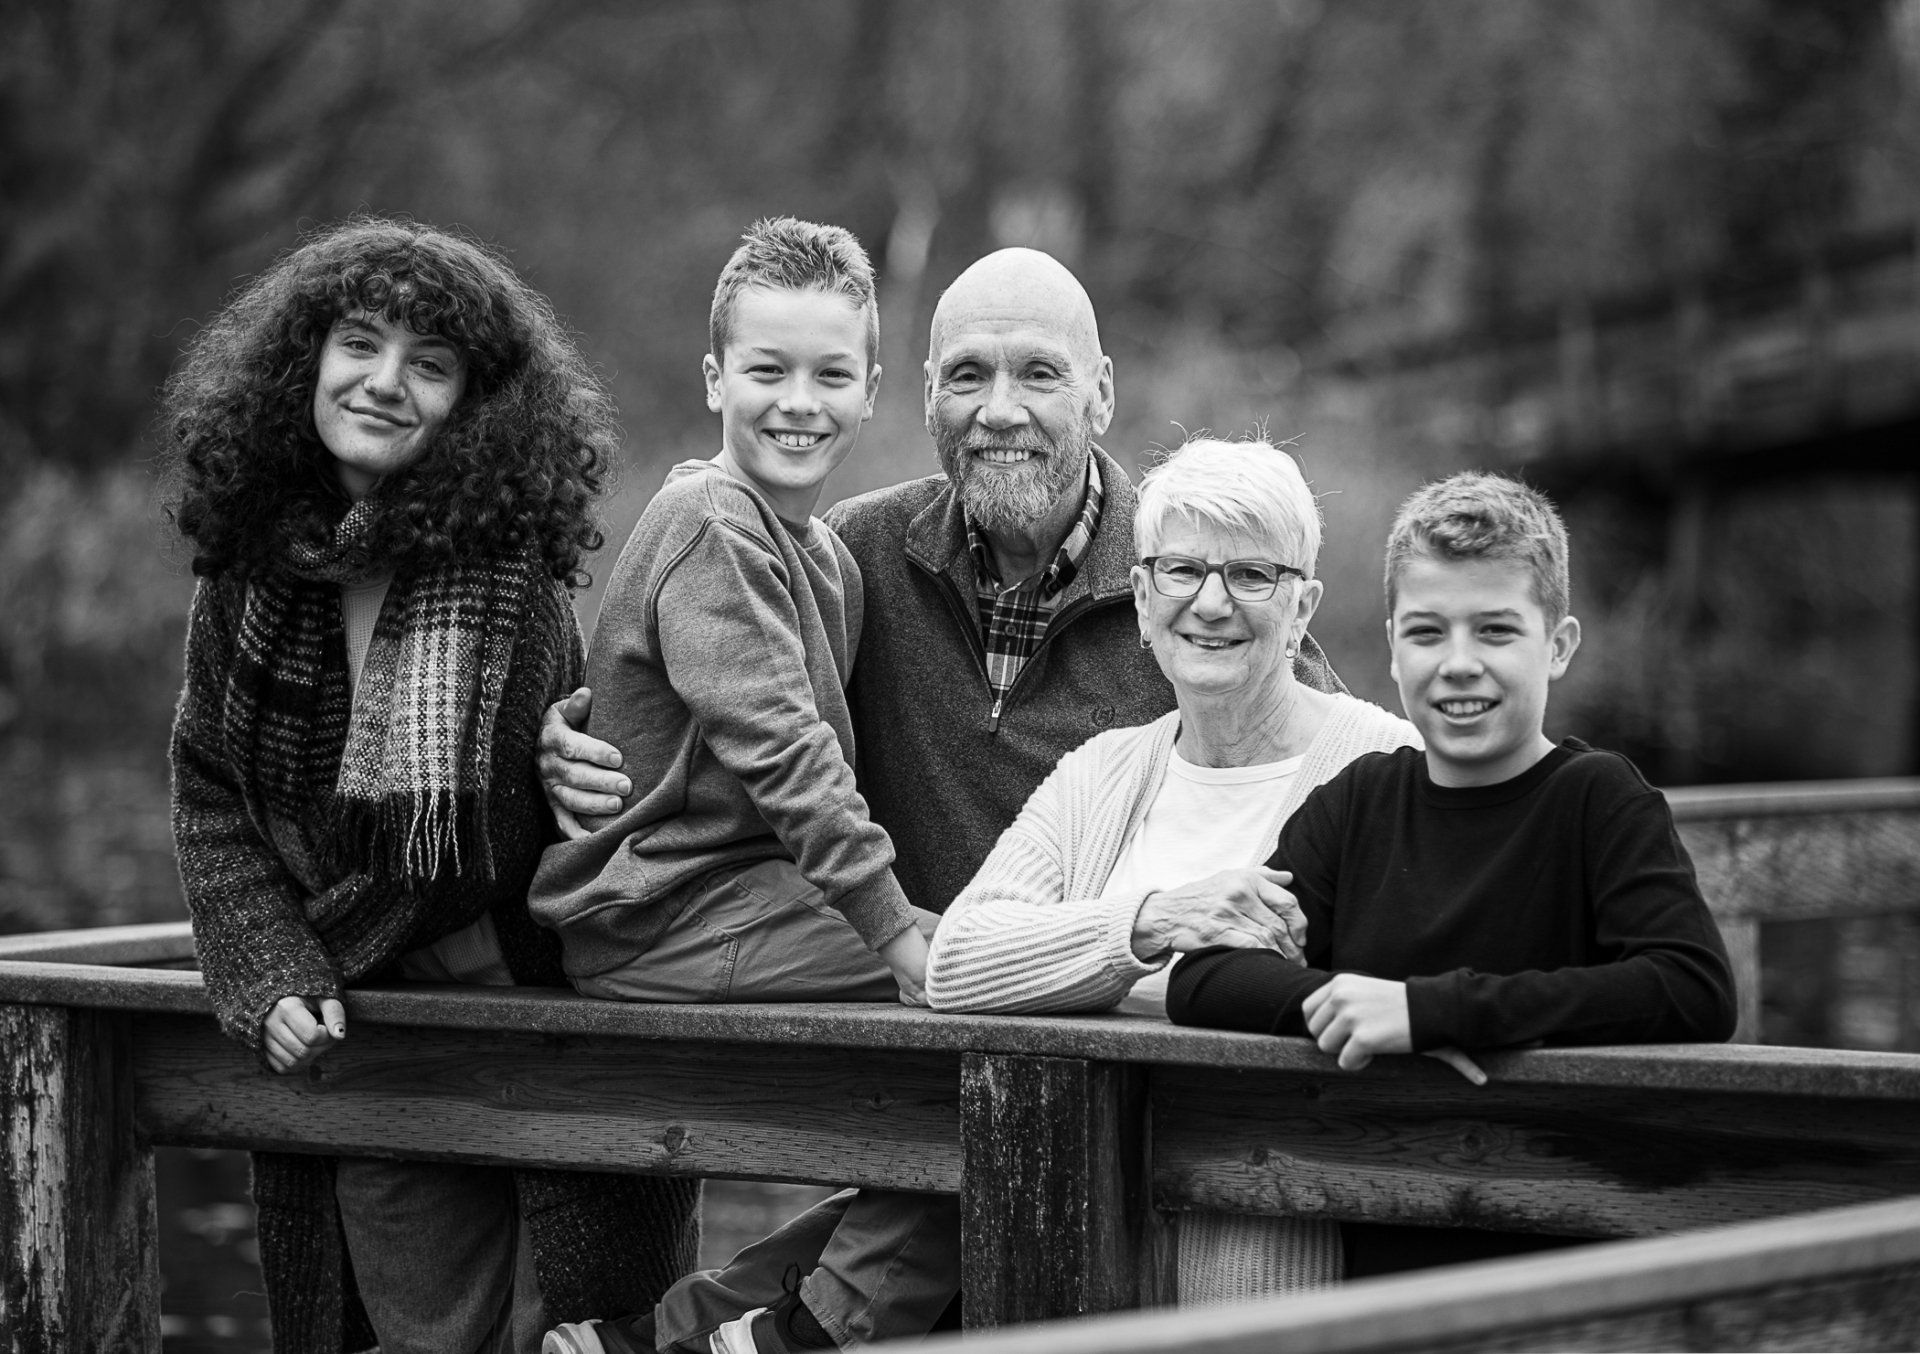 Natalie-DAngelo-Photography-Vancouver-BC-Canada-BlackWhite-Family-Portraits-Visual-Storyteller-grandparents-grandkids-portrait-multigeneration